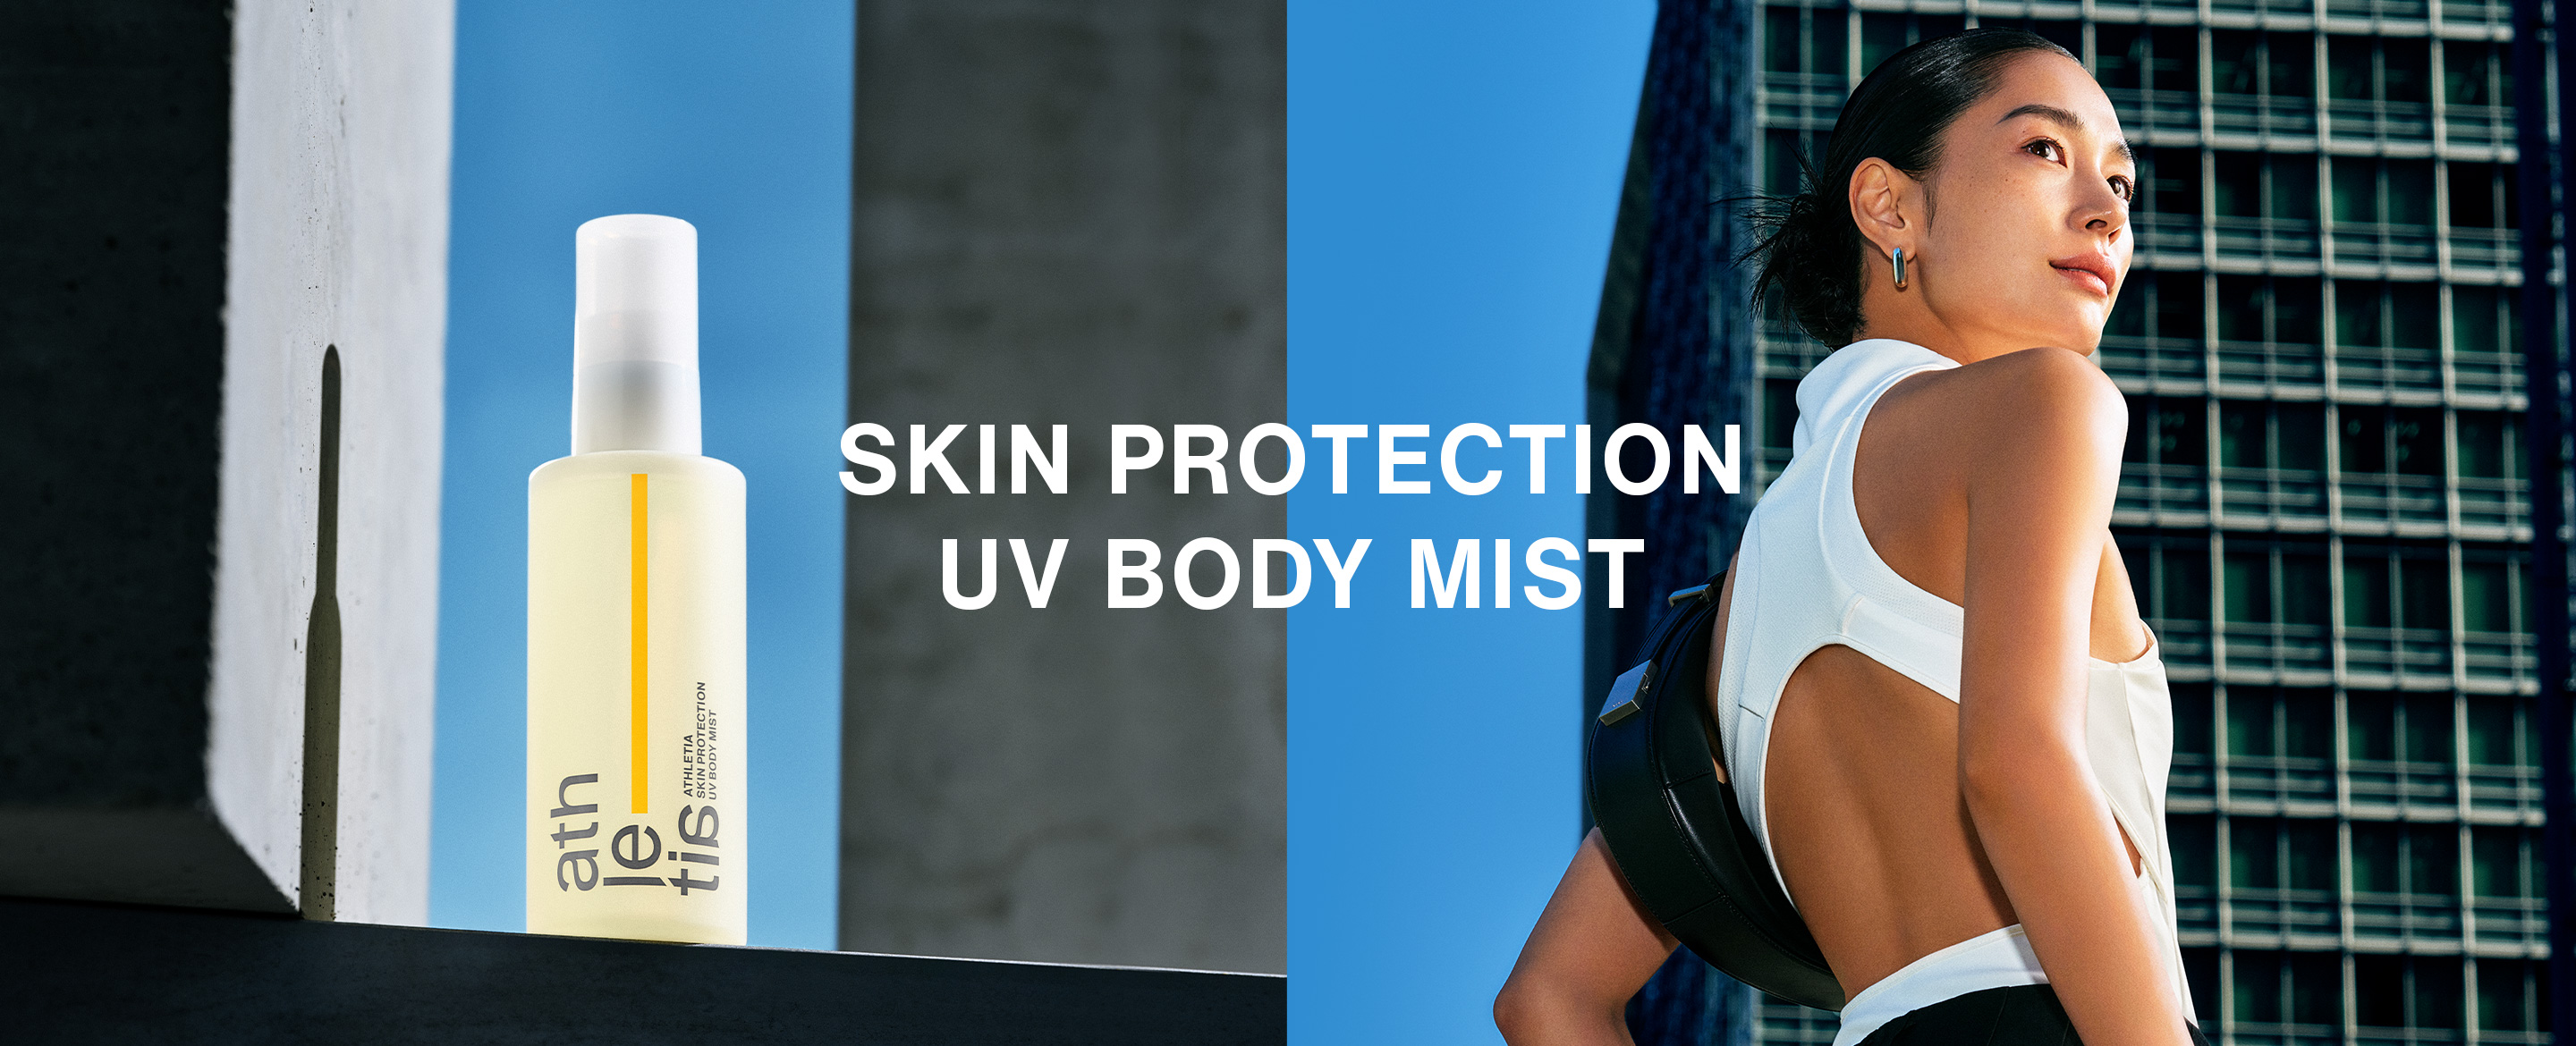 SKIN PROTECTION UV BODY MIST